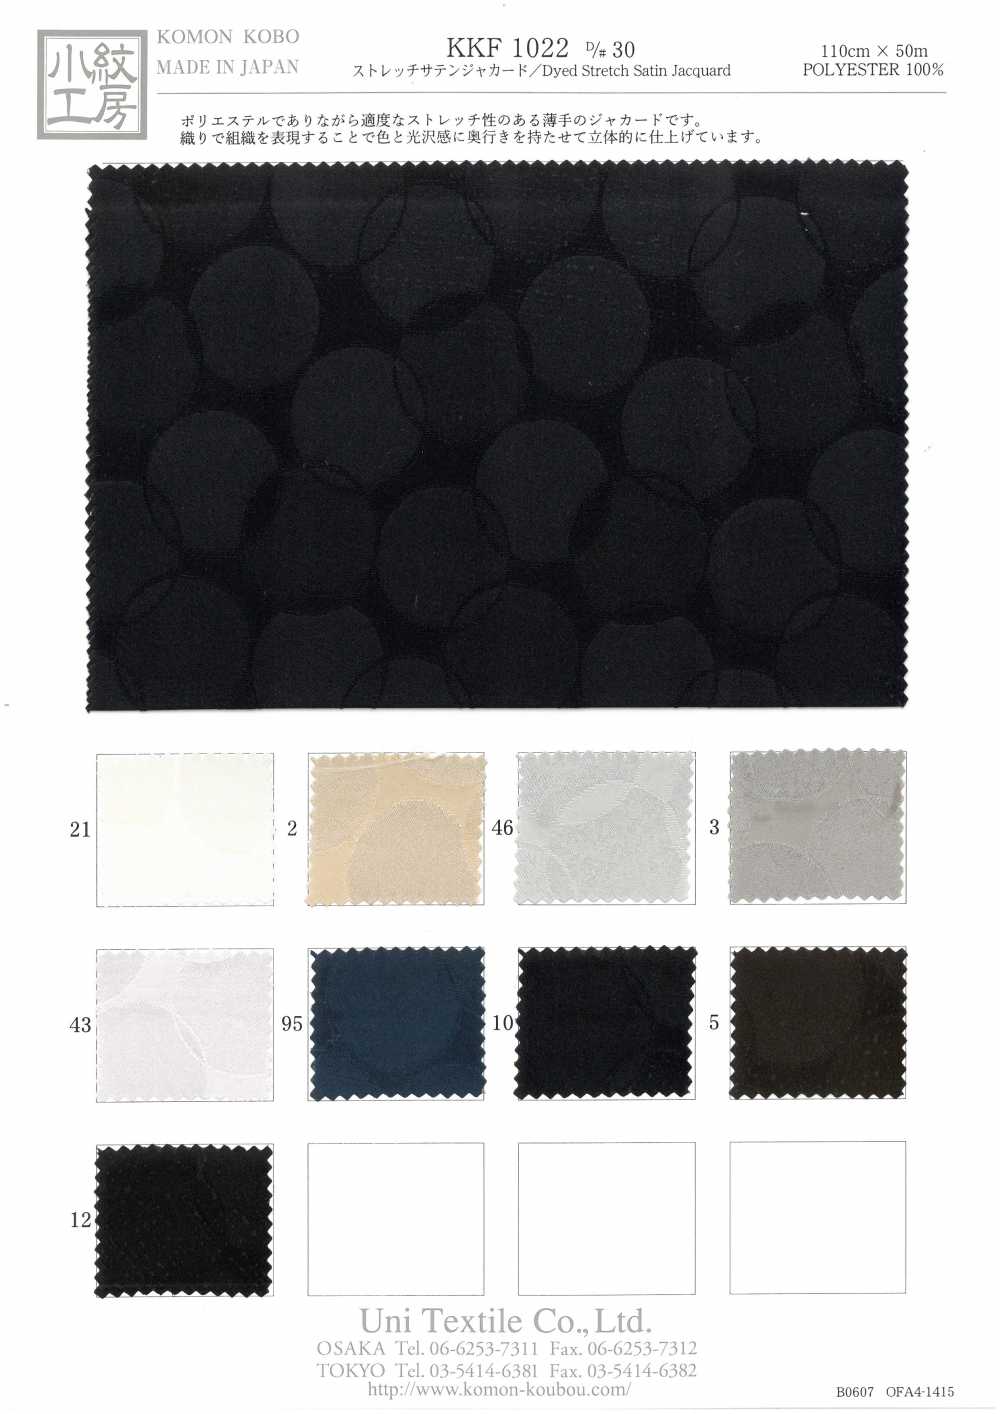 KKF1022-D/30 Co Giãn Vải Sa Tanh Uni Textile